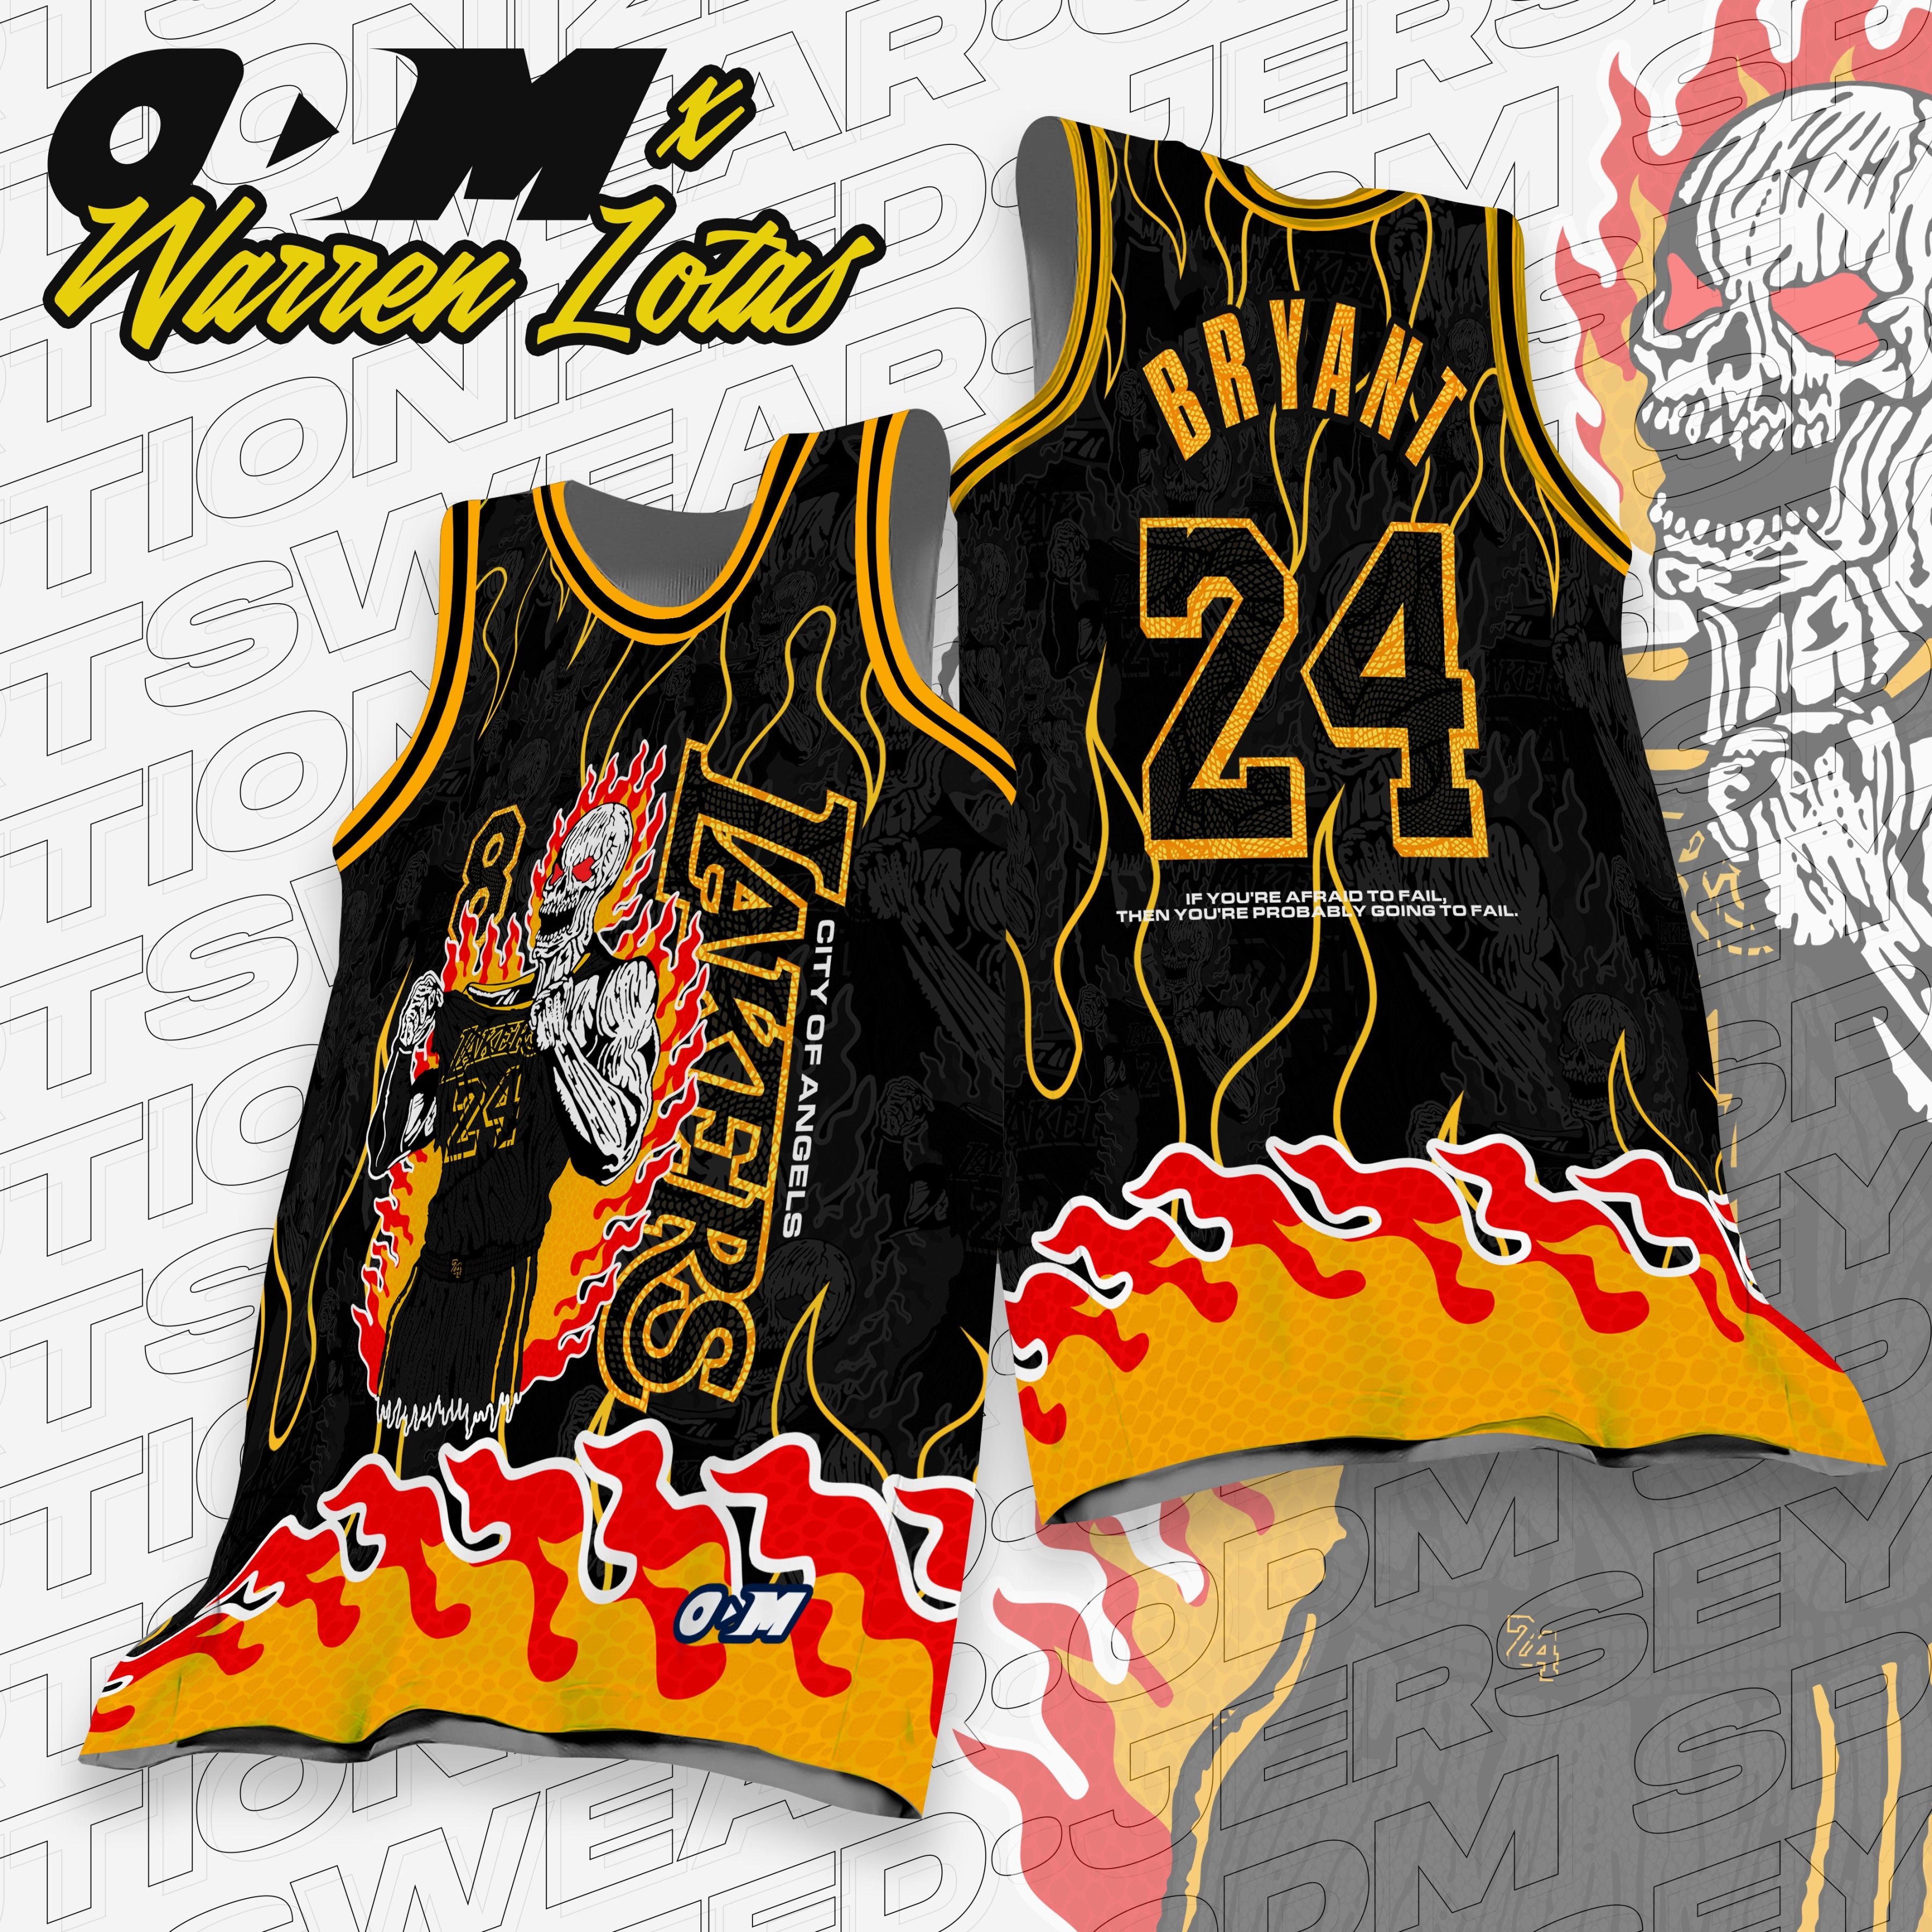 Kobe Lakers x Warren Lotas inspired jersey